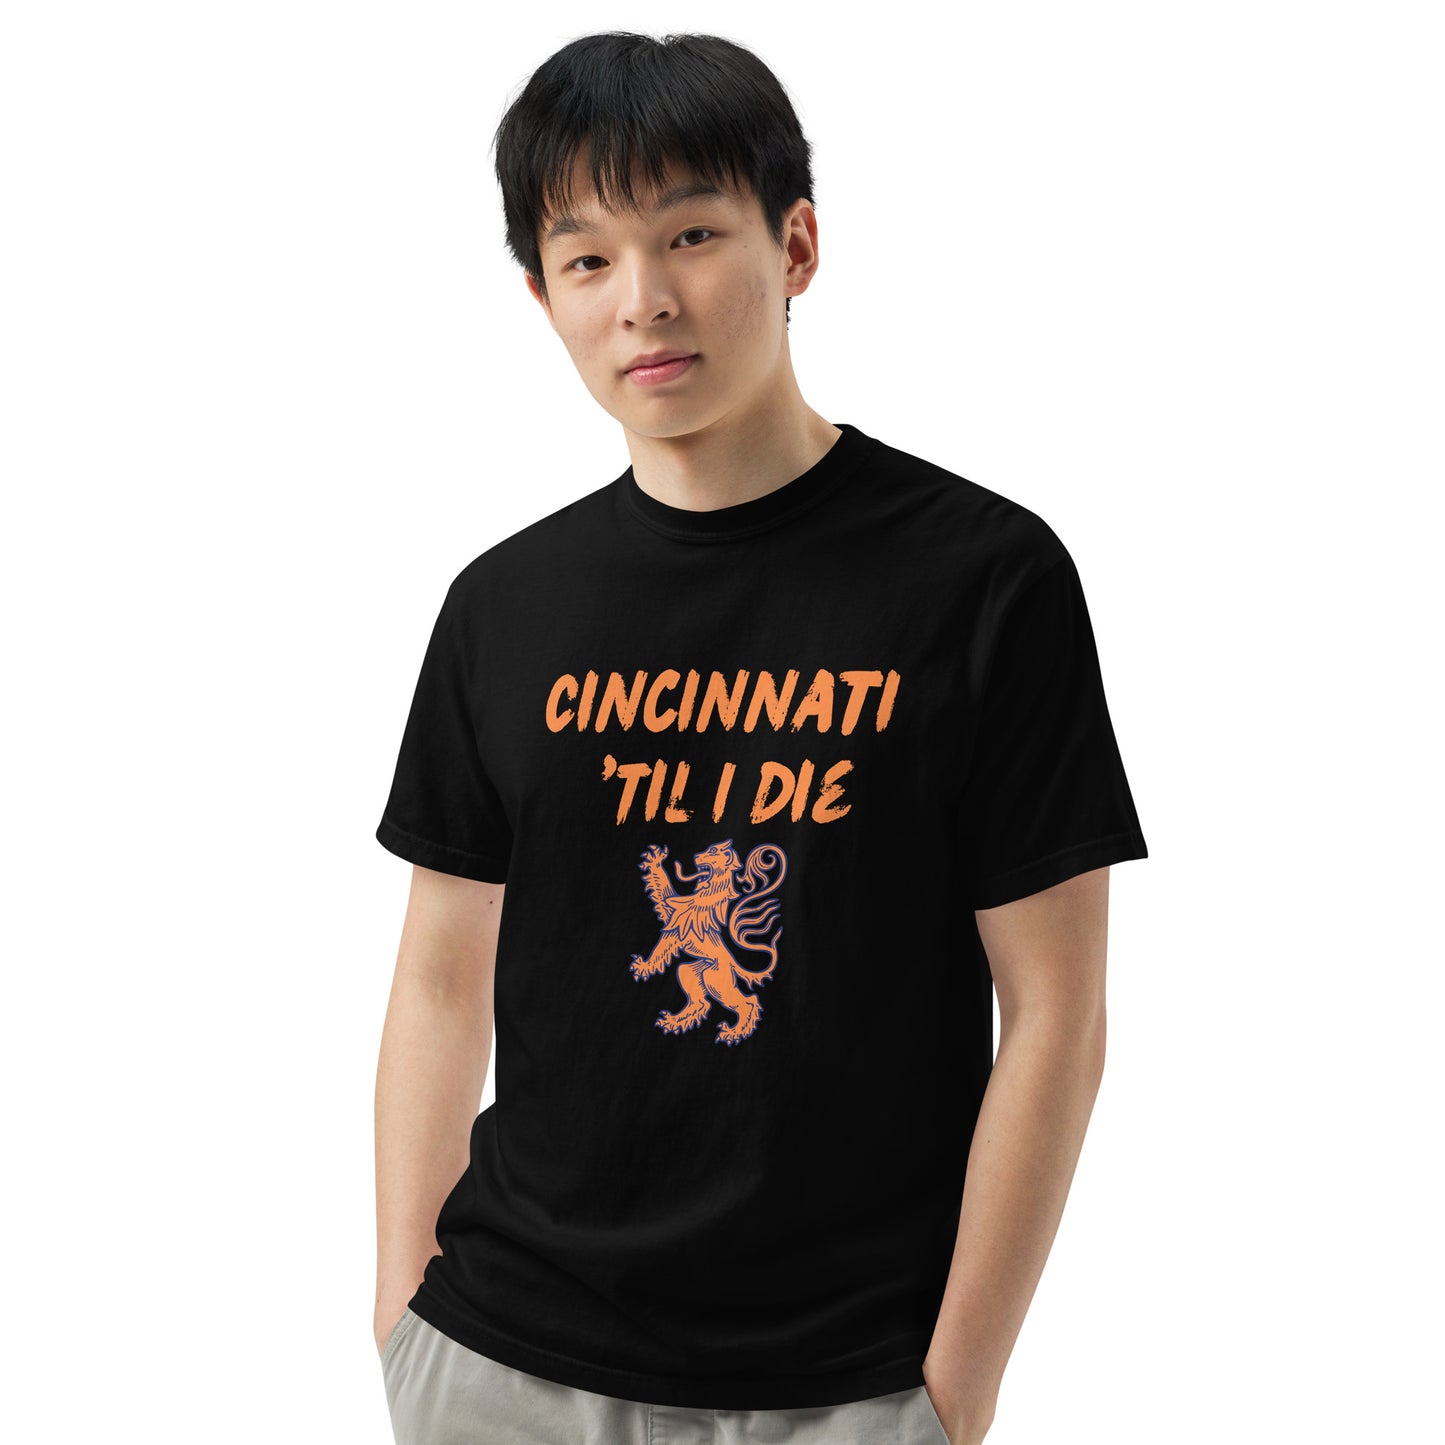 Cincinnati 'Til I Die Men’s garment-dyed heavyweight t-shirt